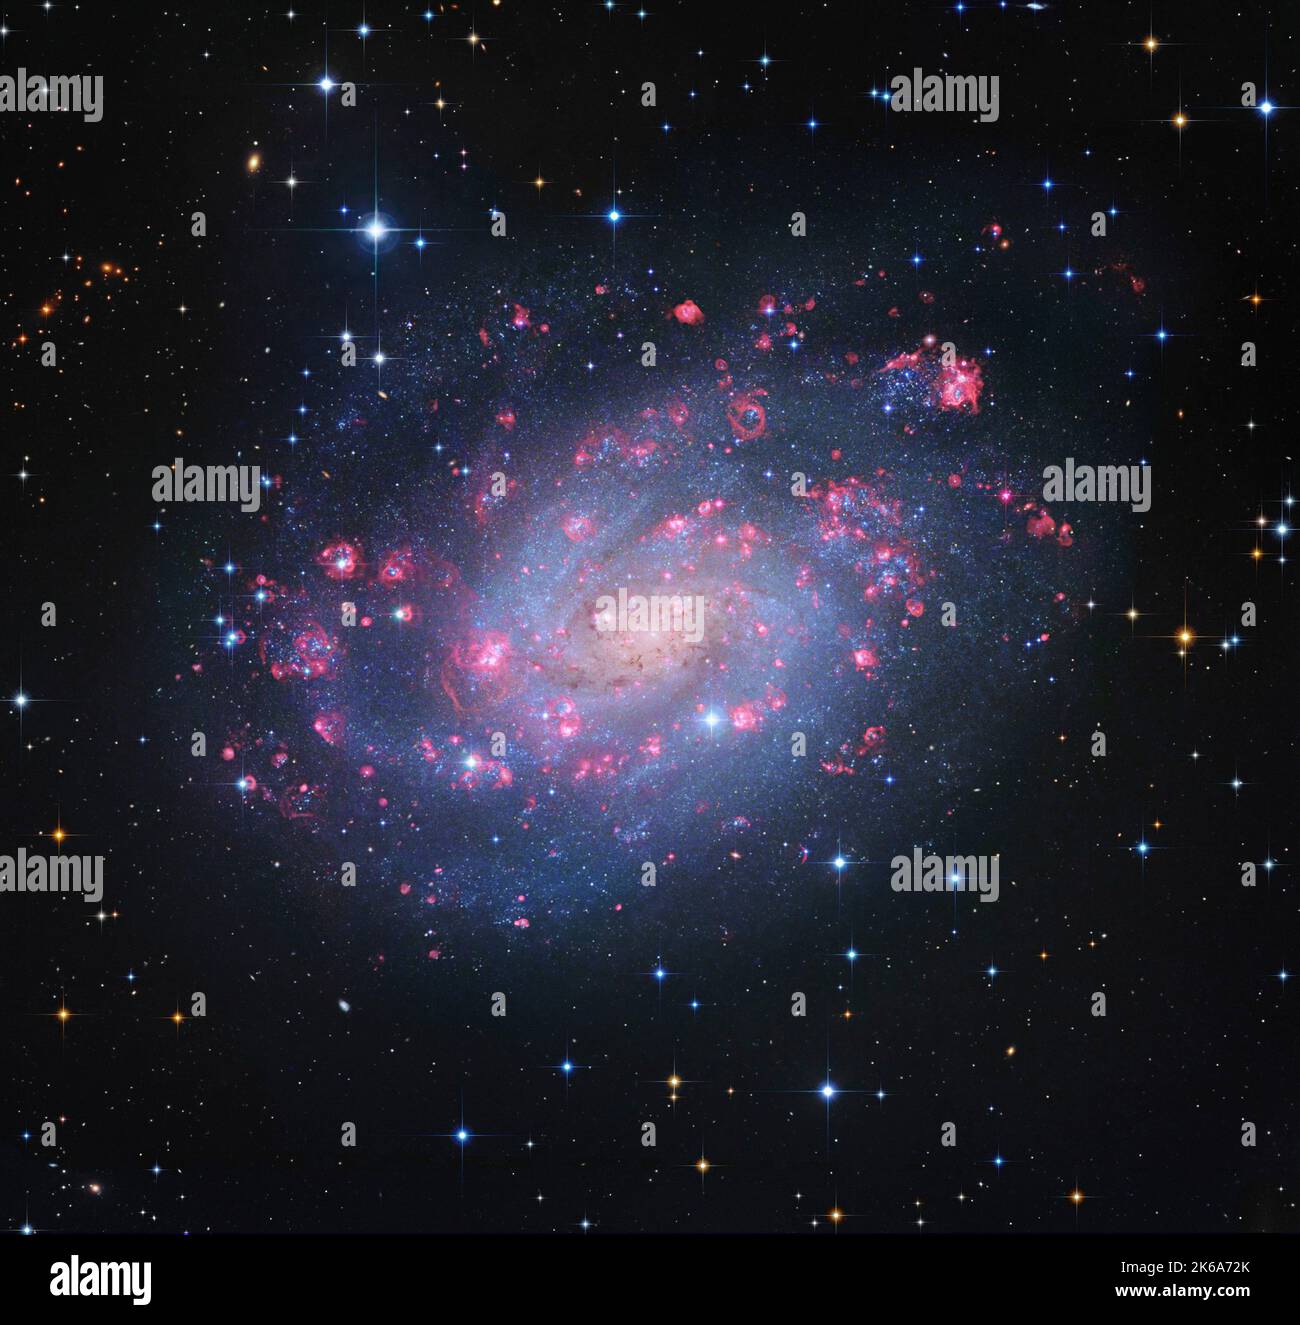 NGC 300, galaxie spirale en Sculptor. Banque D'Images